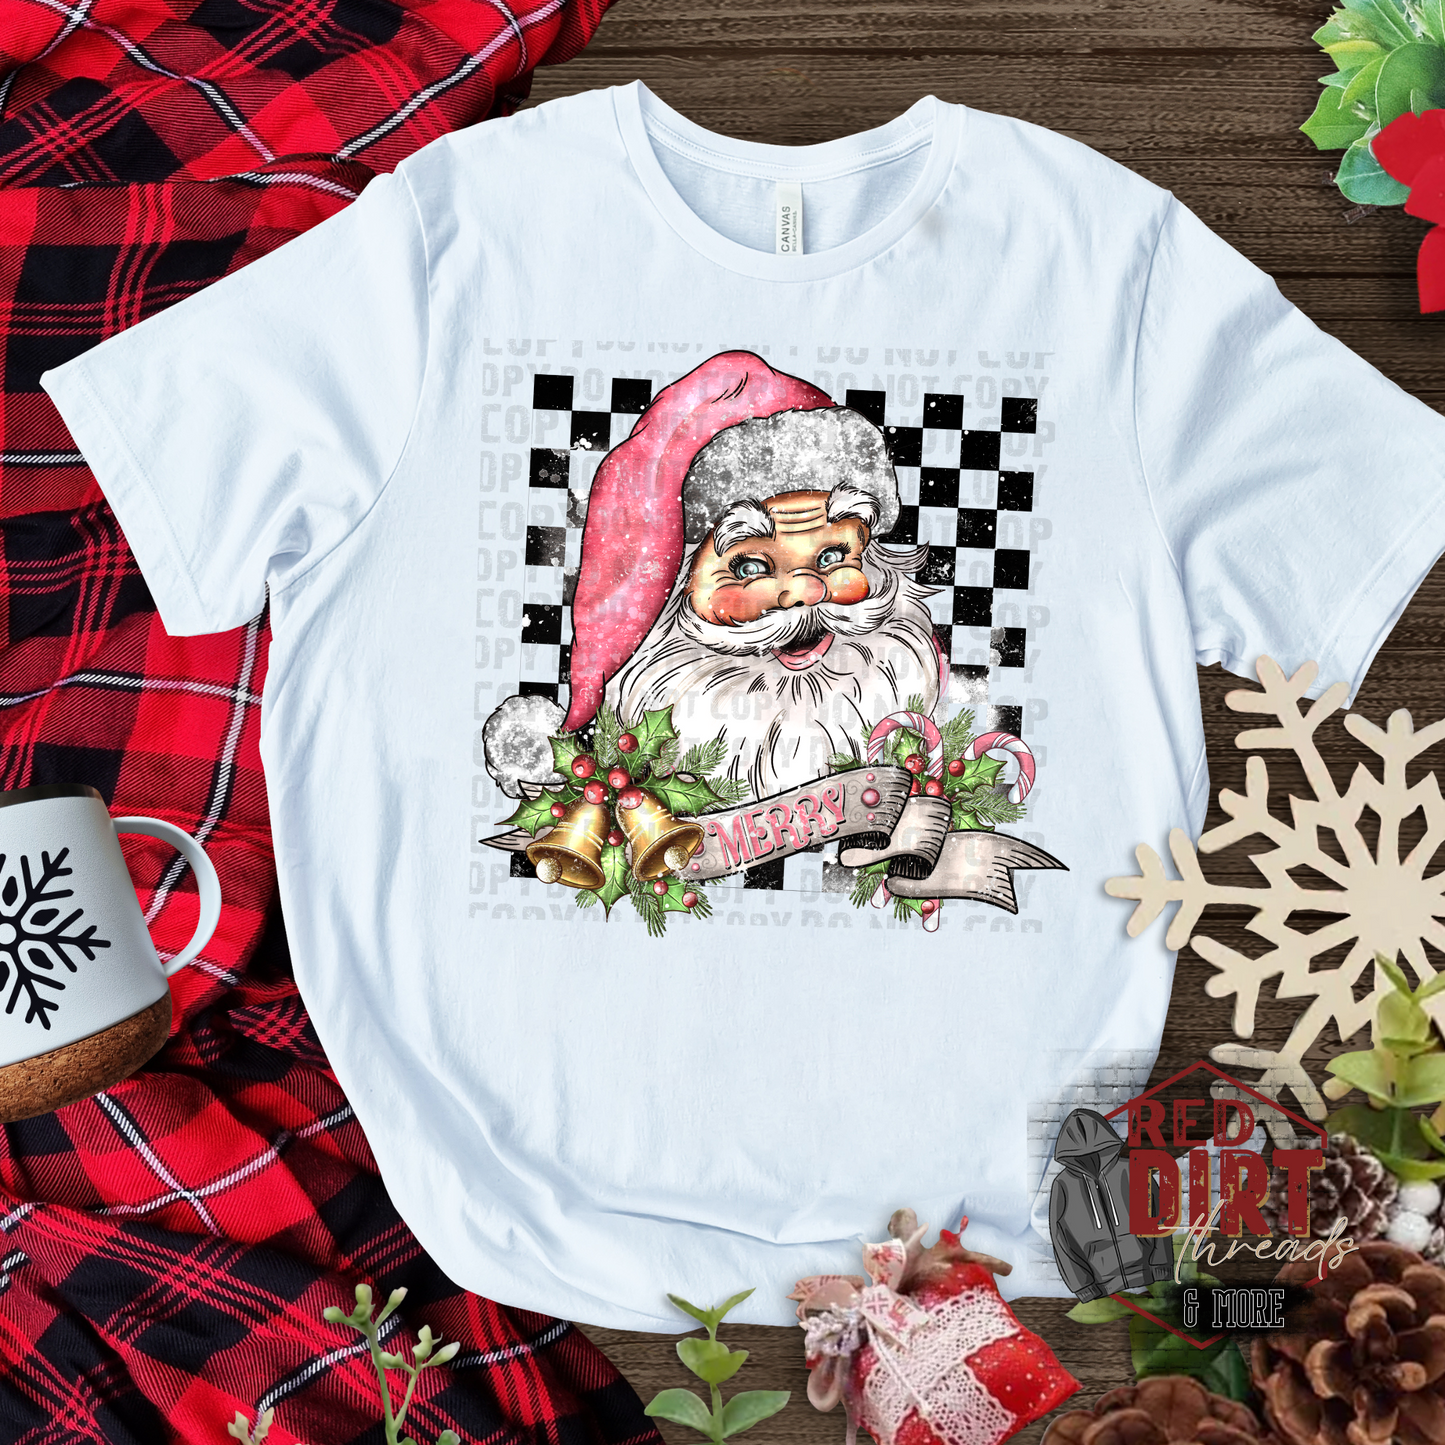 Vintage Pink Santa T-Shirt | Trendy Christmas Shirt | Fast Shipping | Super Soft Shirts for Women/Kid's